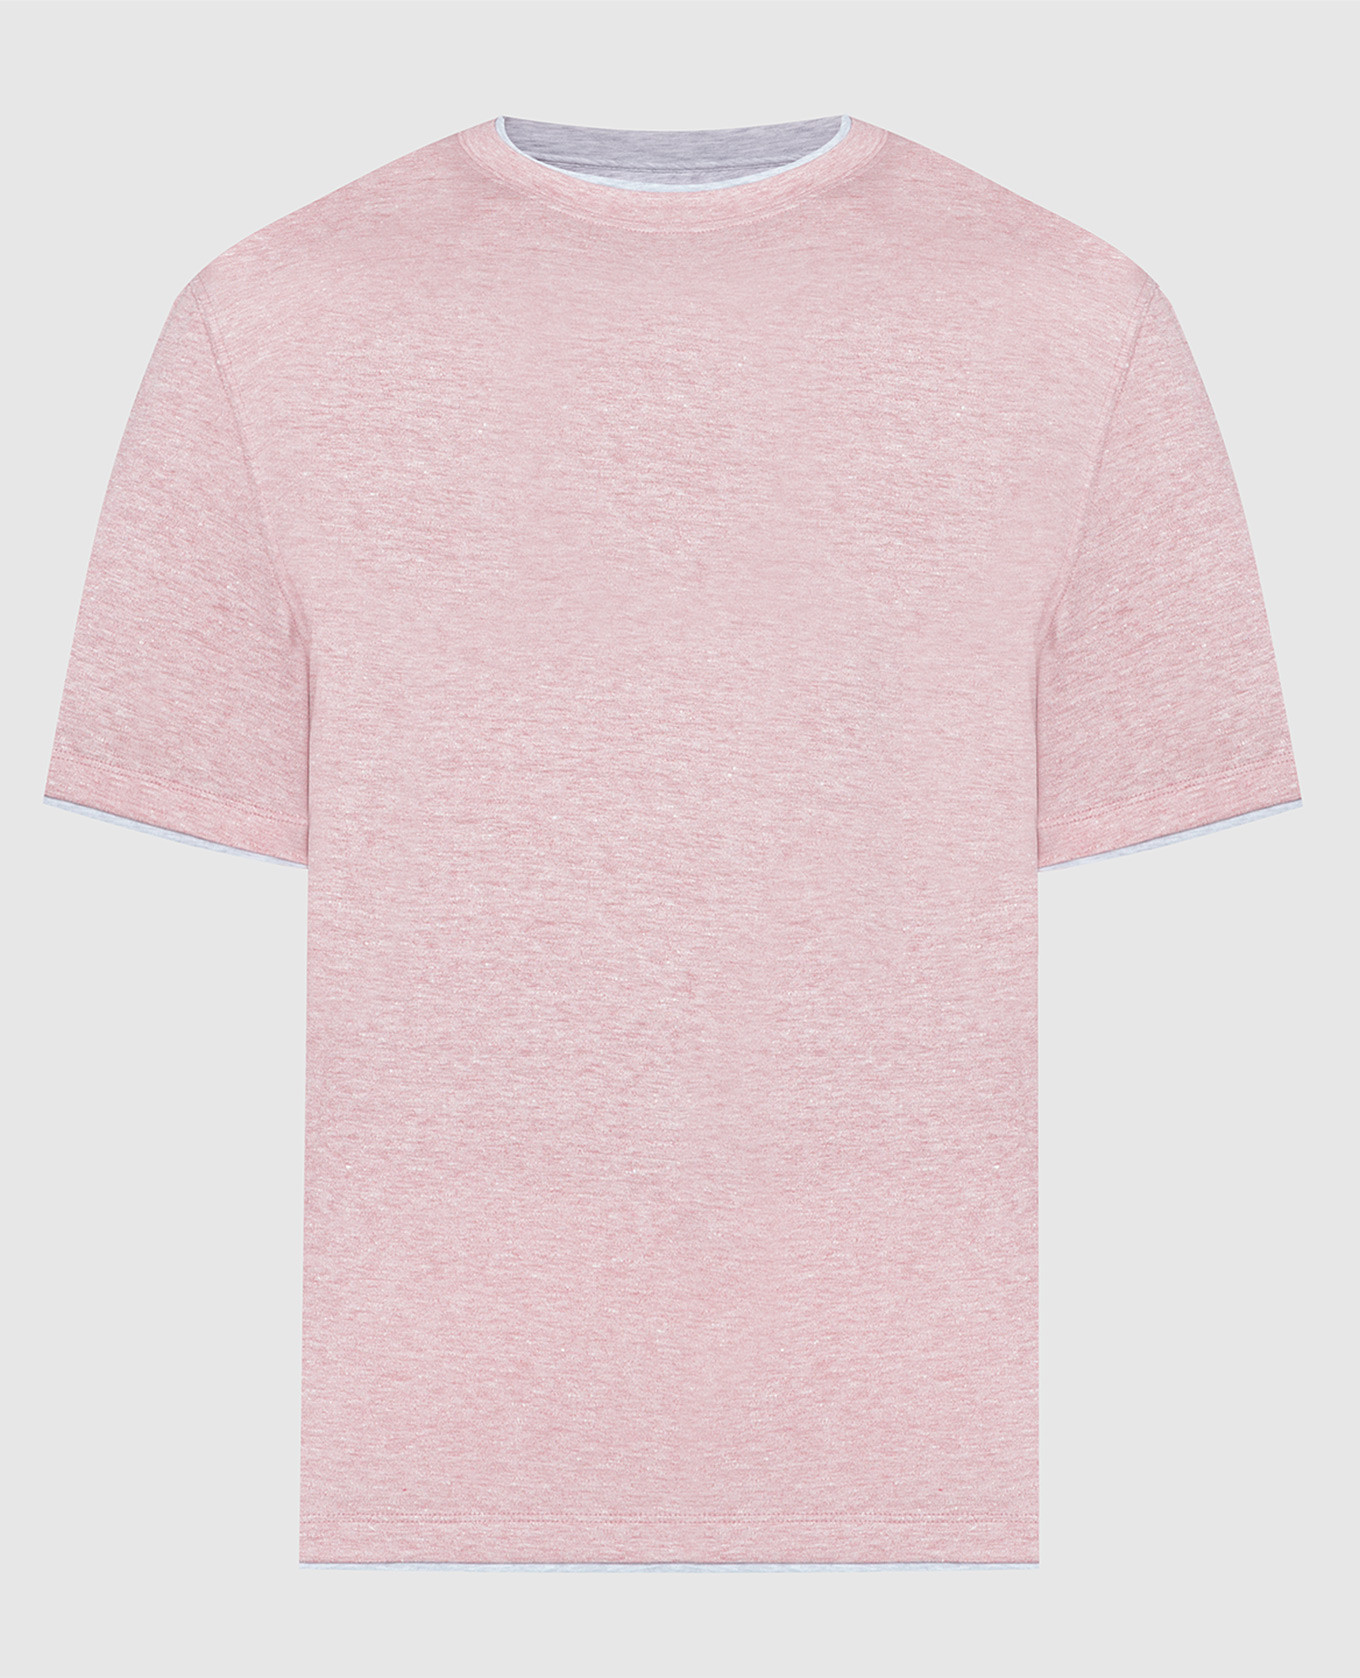 Pink melange t-shirt with linen